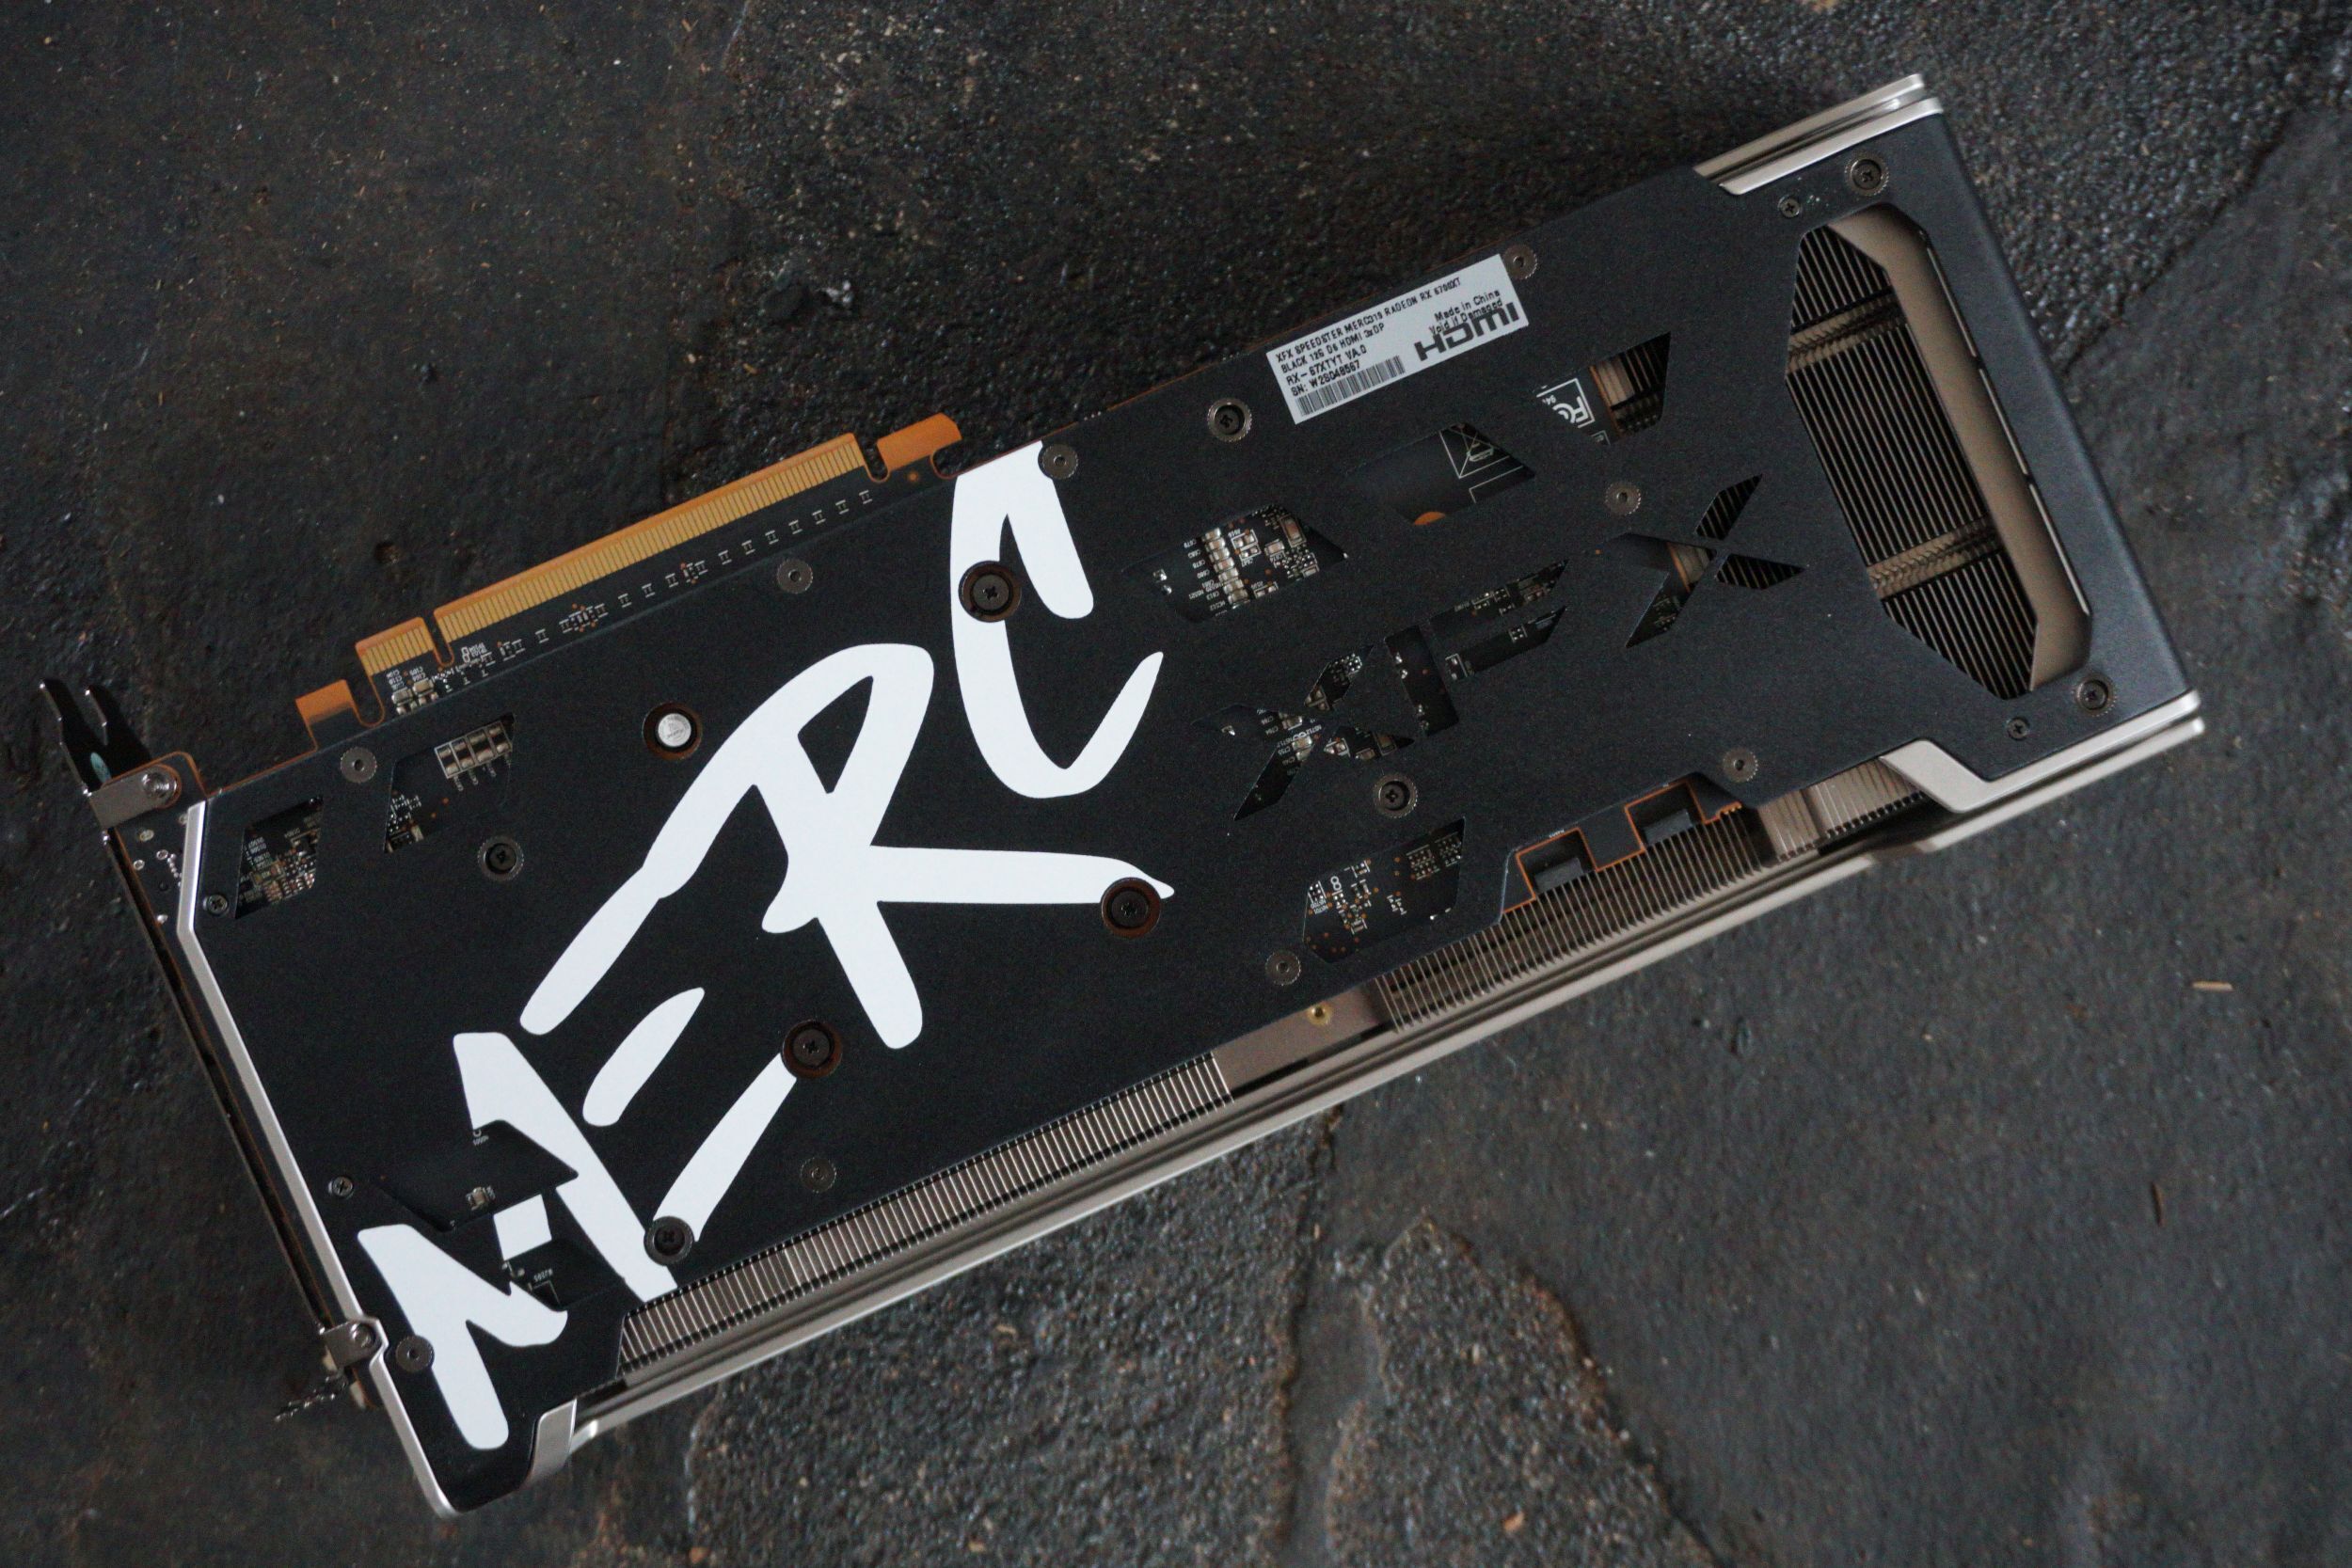 XFX Radeon RX 6700 XT Merc 319 review: Big, beautiful, and utterly